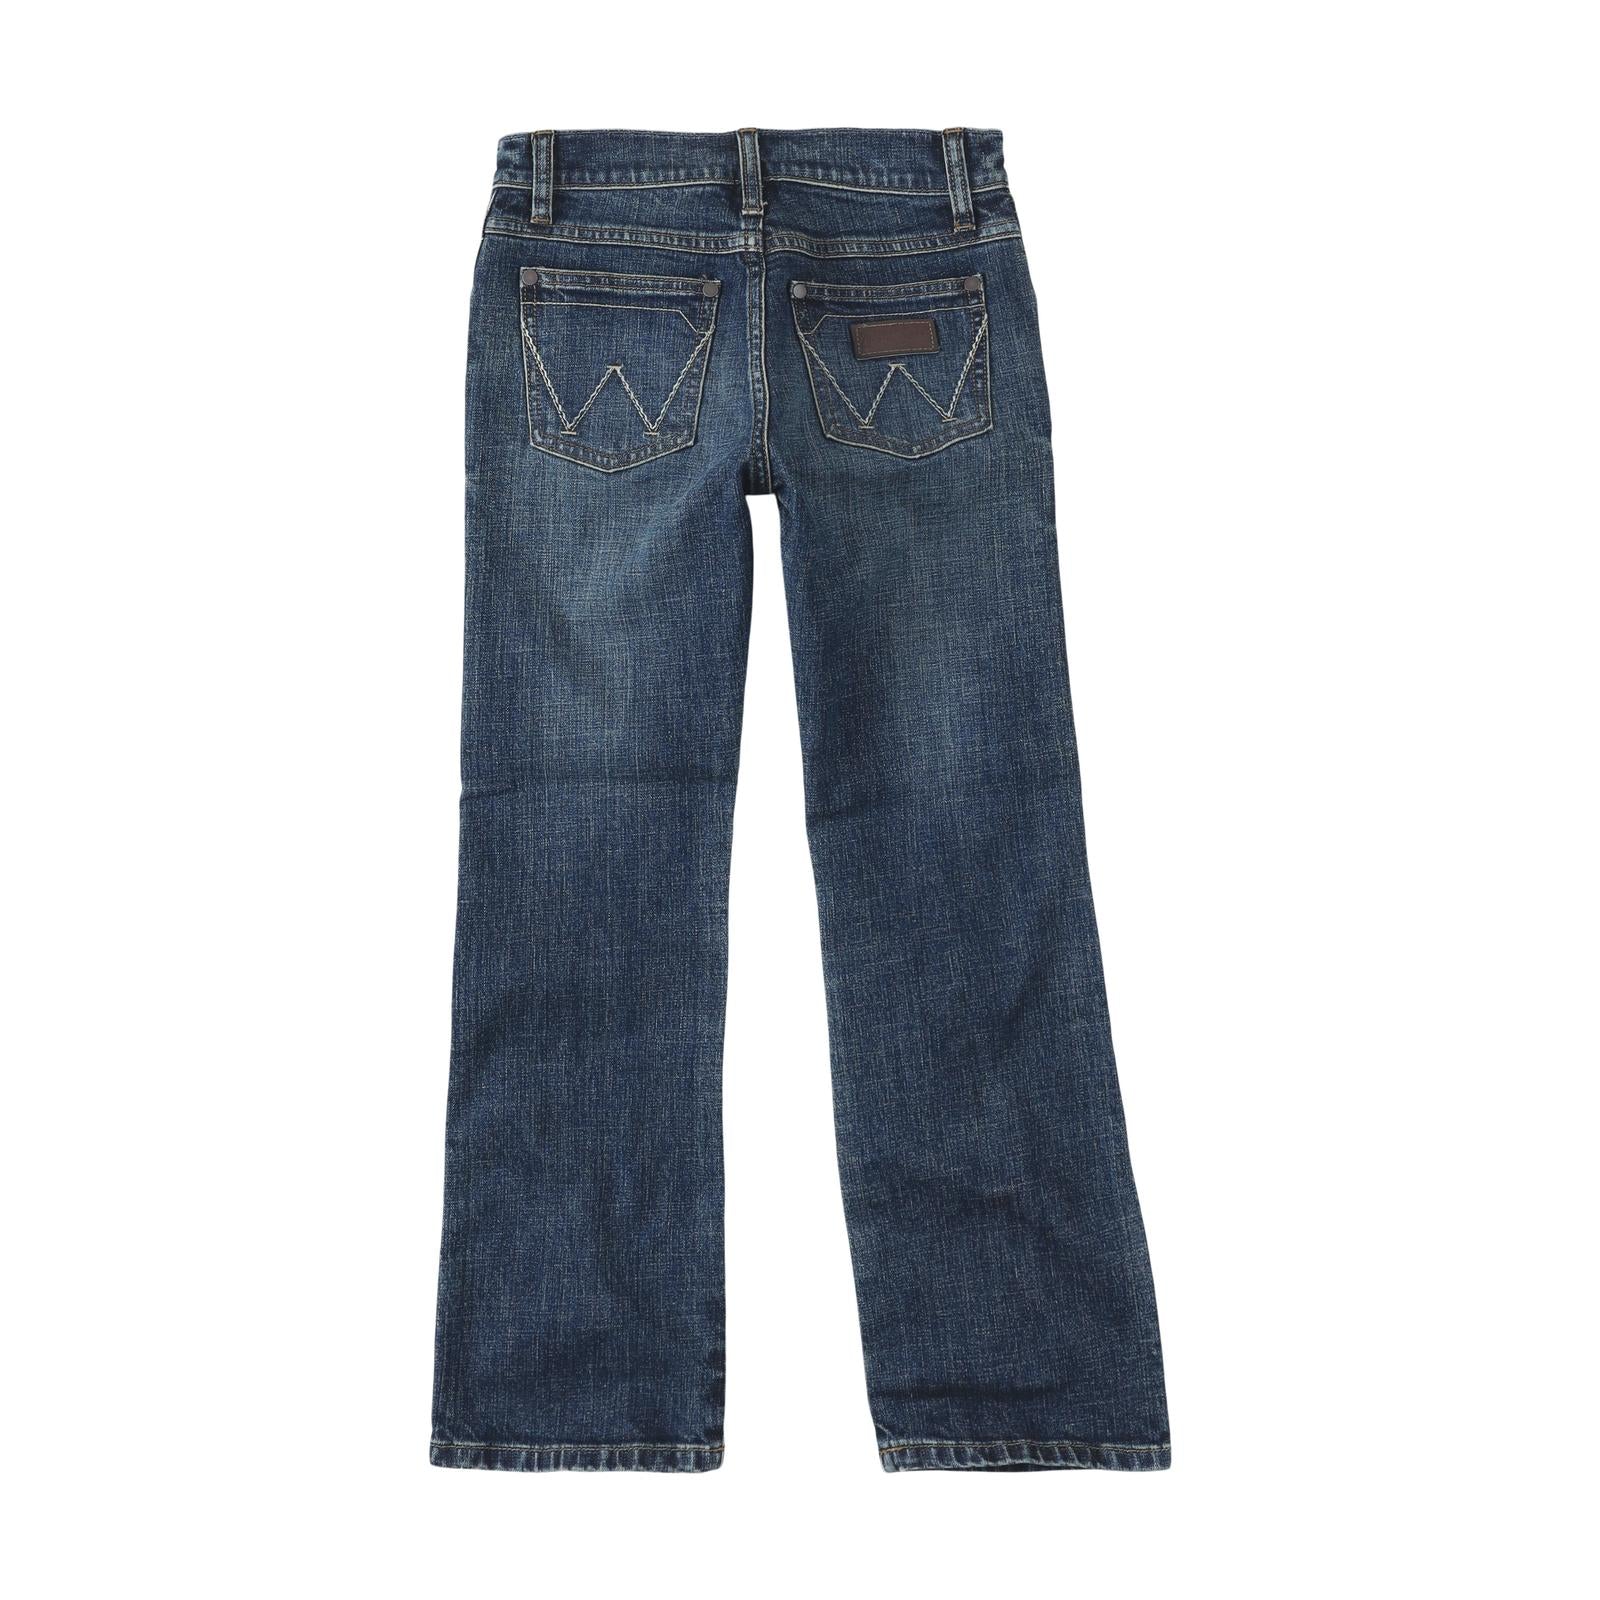 Wrangler Toddler Boys Retro Slim Boot Cut Jeans - Layton